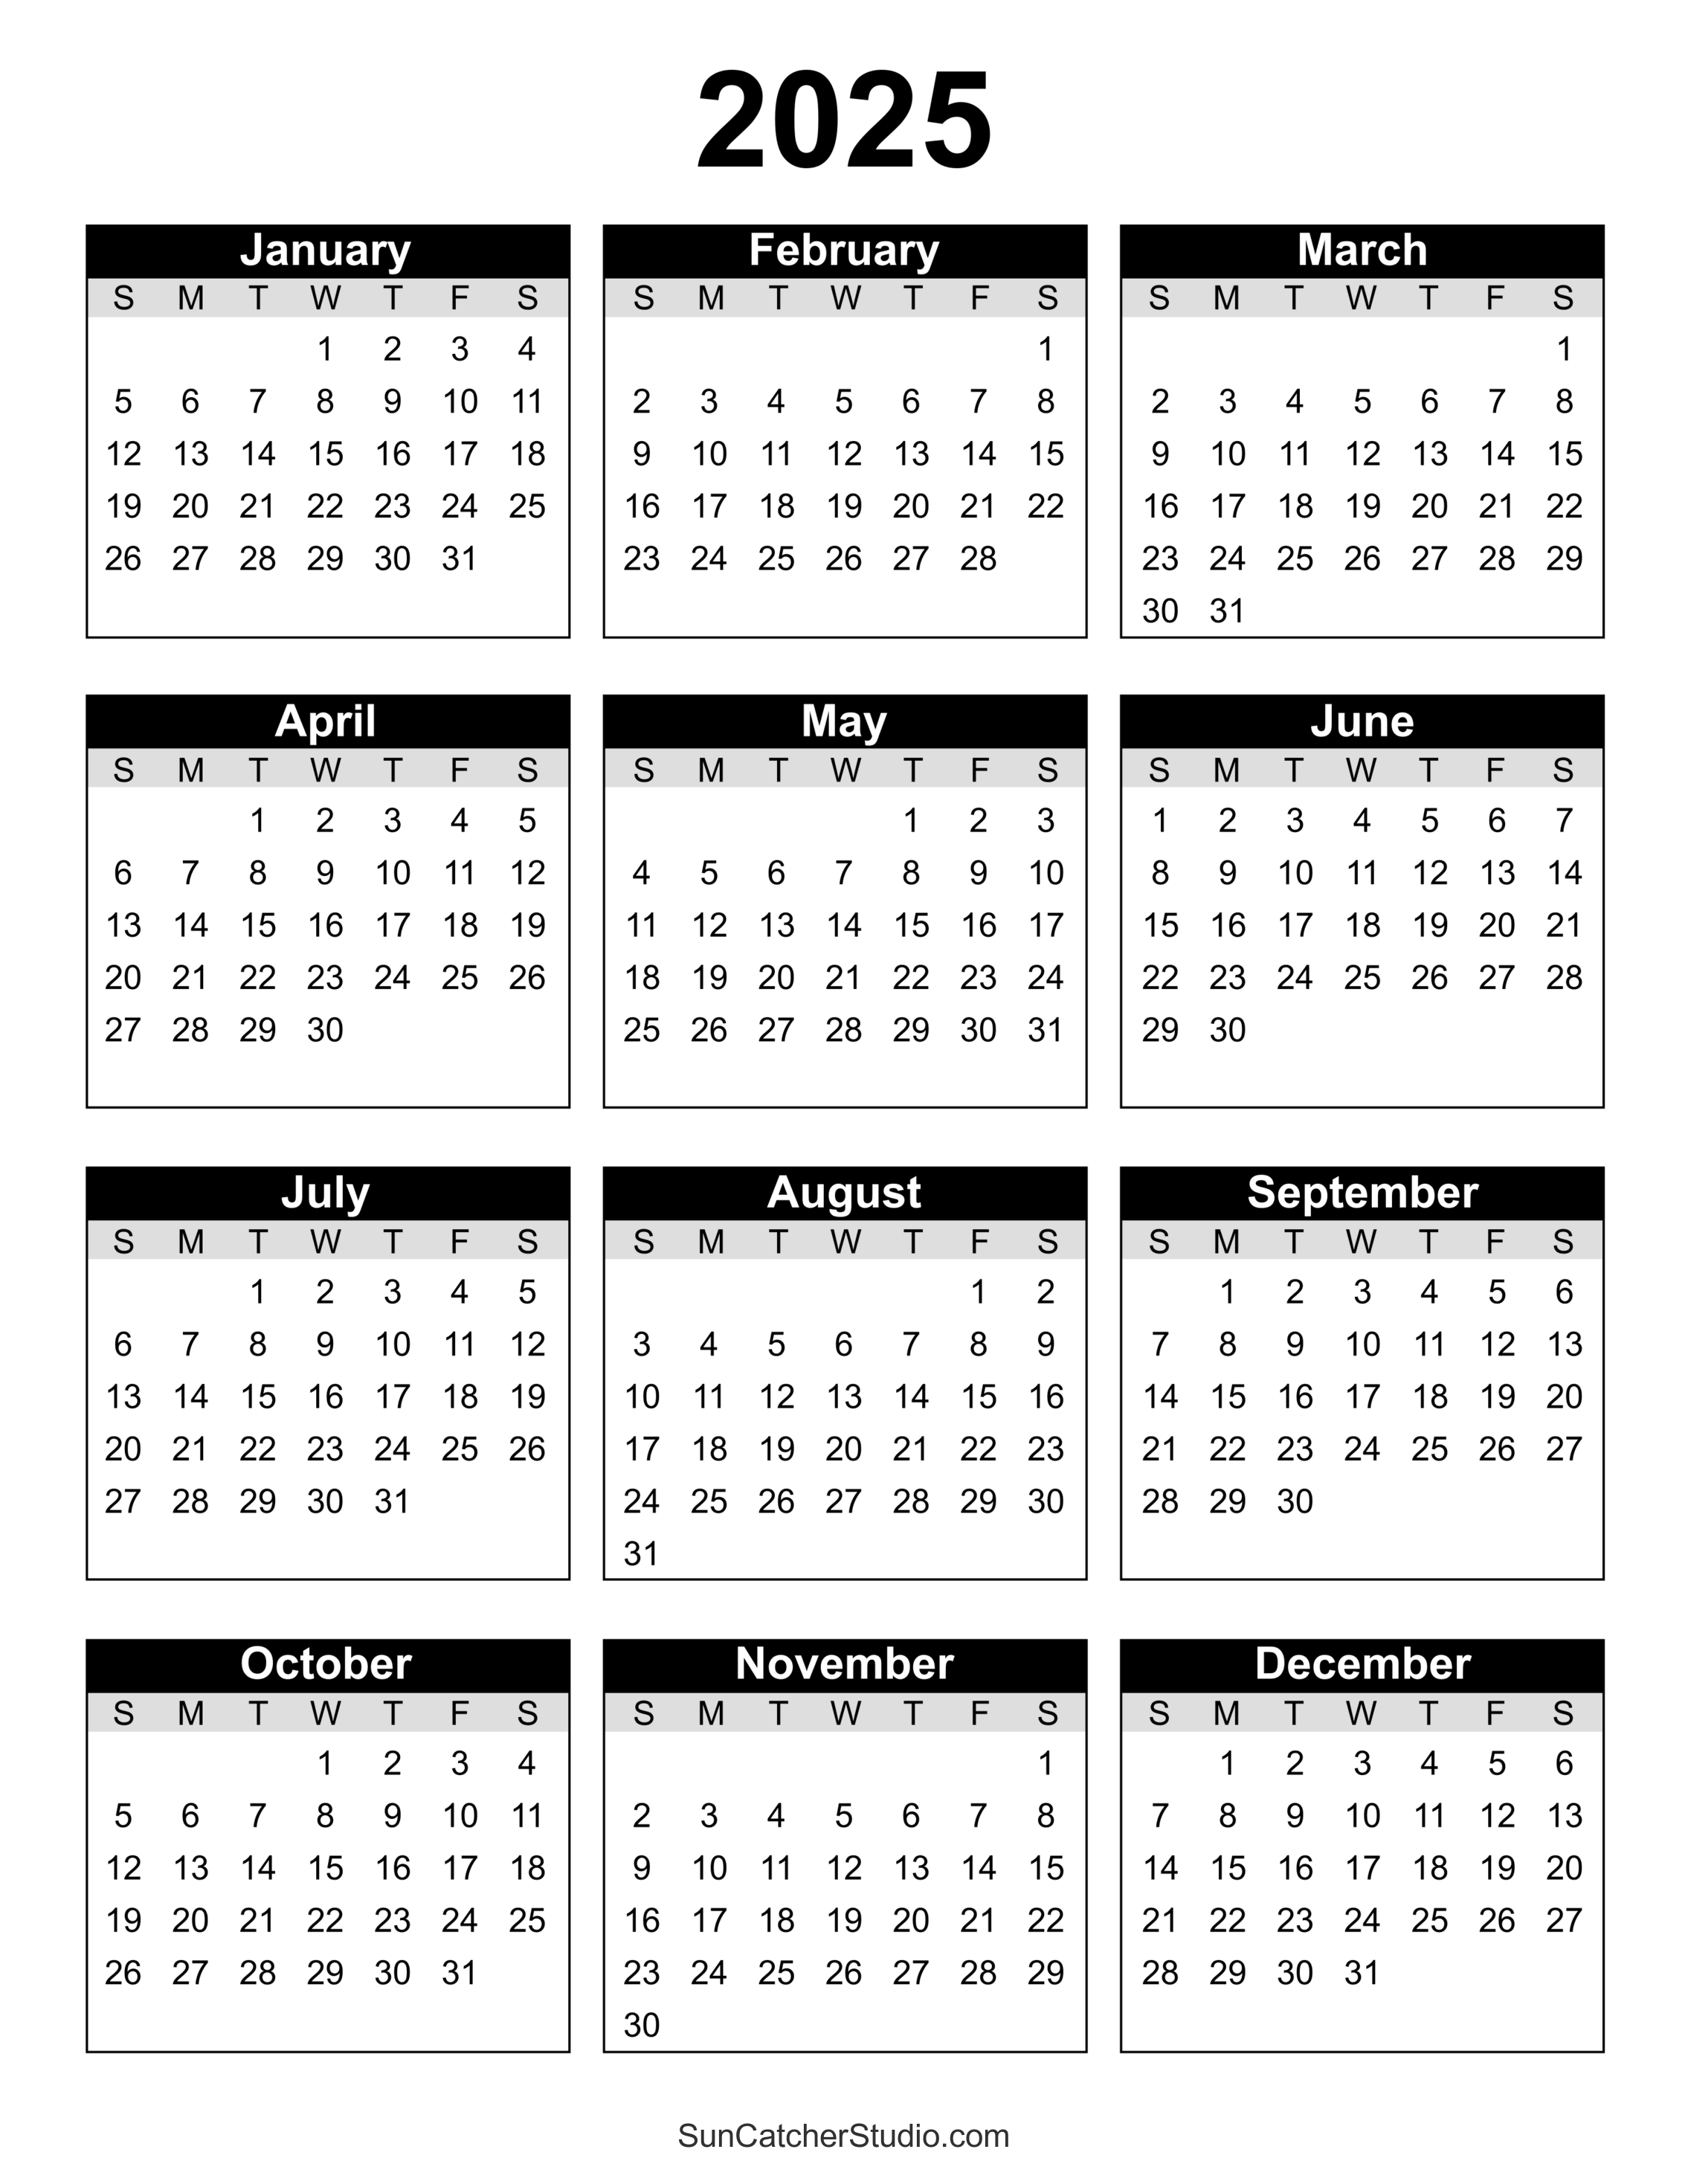 2025 Annual Calendar Printable Word Count ashlan benedikta